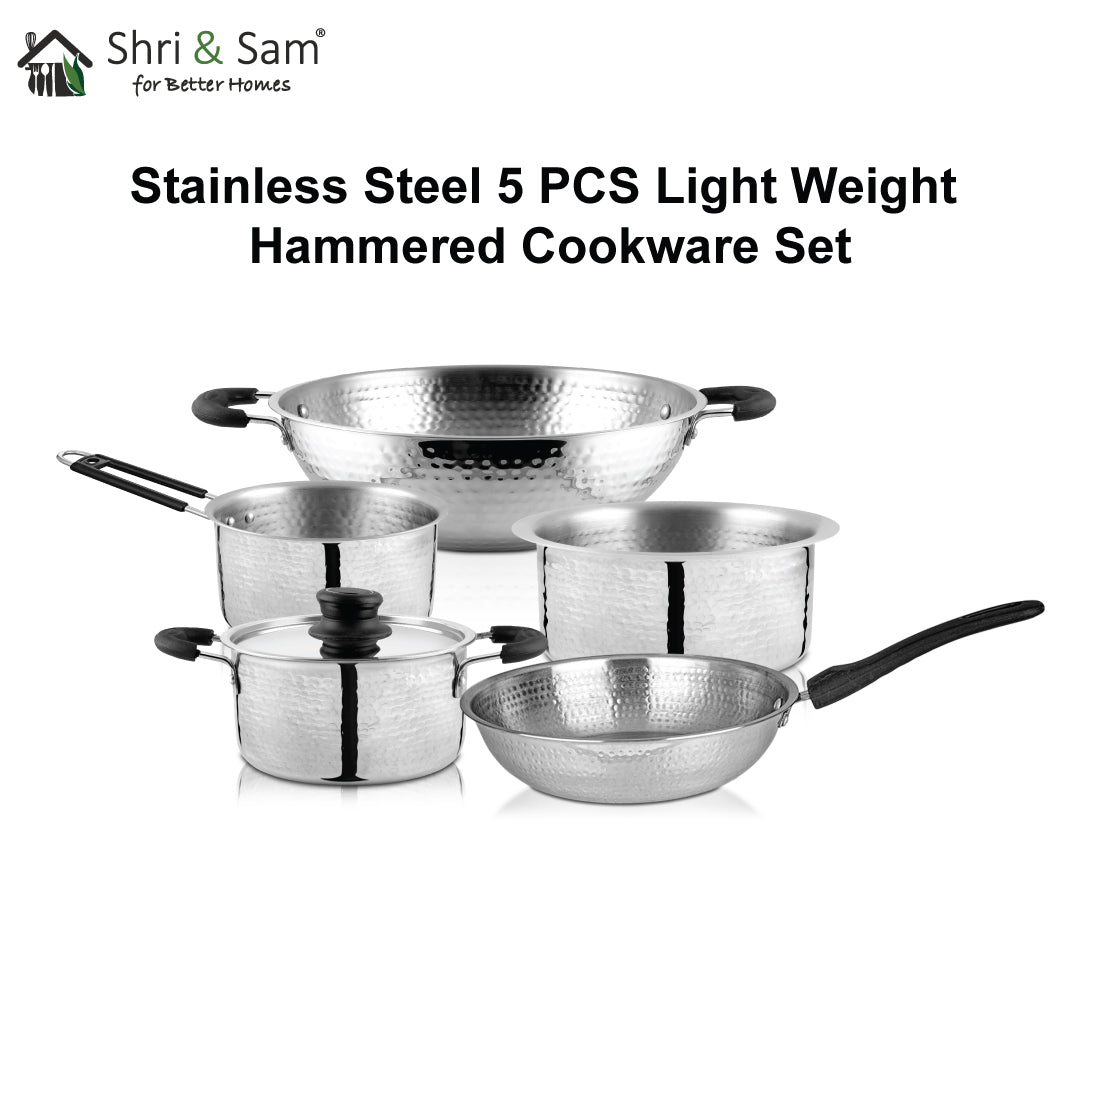 Stainless Steel 5 PCS Light Weight Hammered Cookware Set